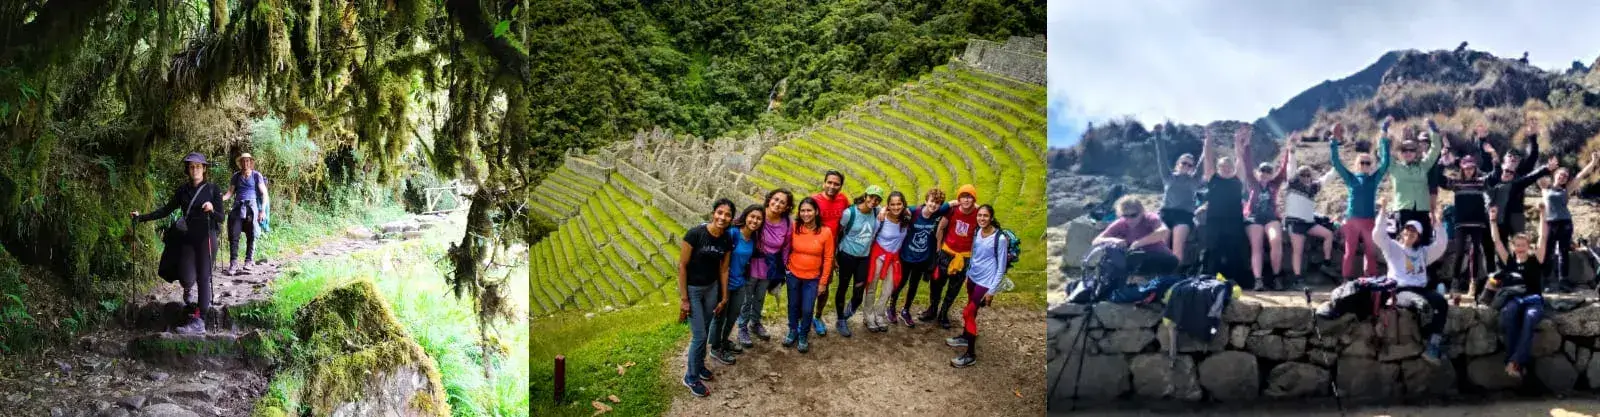 Classic Inca Trail 4 days and 3 nights to Machu Picchu - Local Trekkers Peru - Local Trekkers Peru